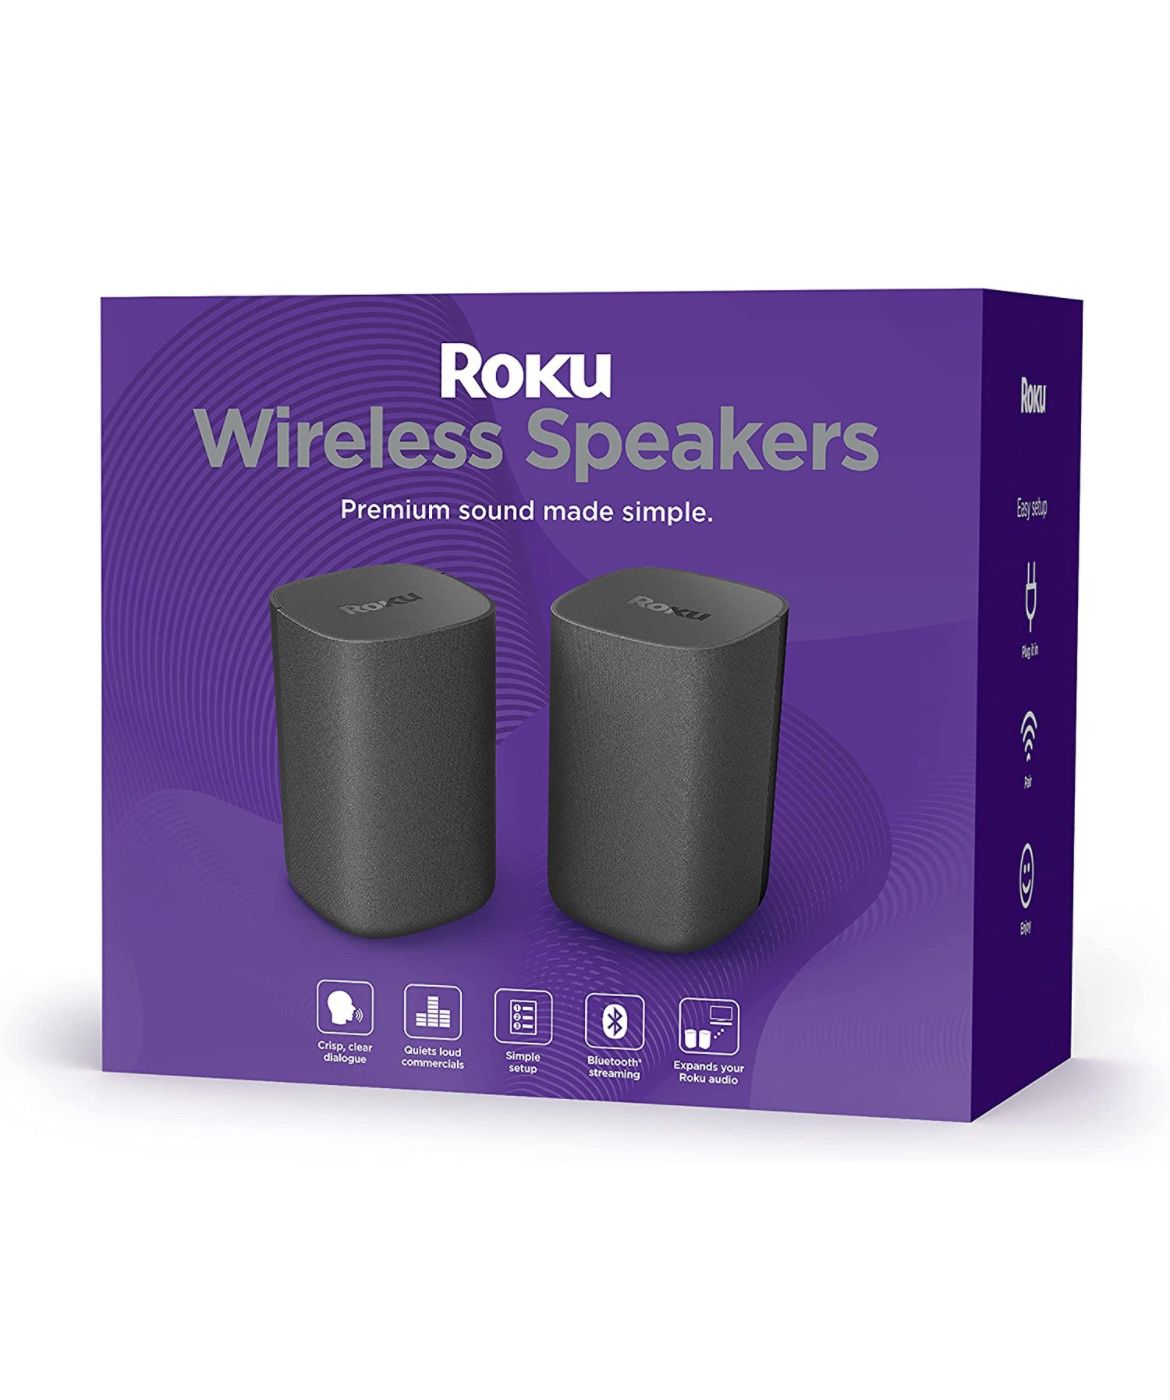 Roku Wireless Speakers /Altavoces Inalambricos